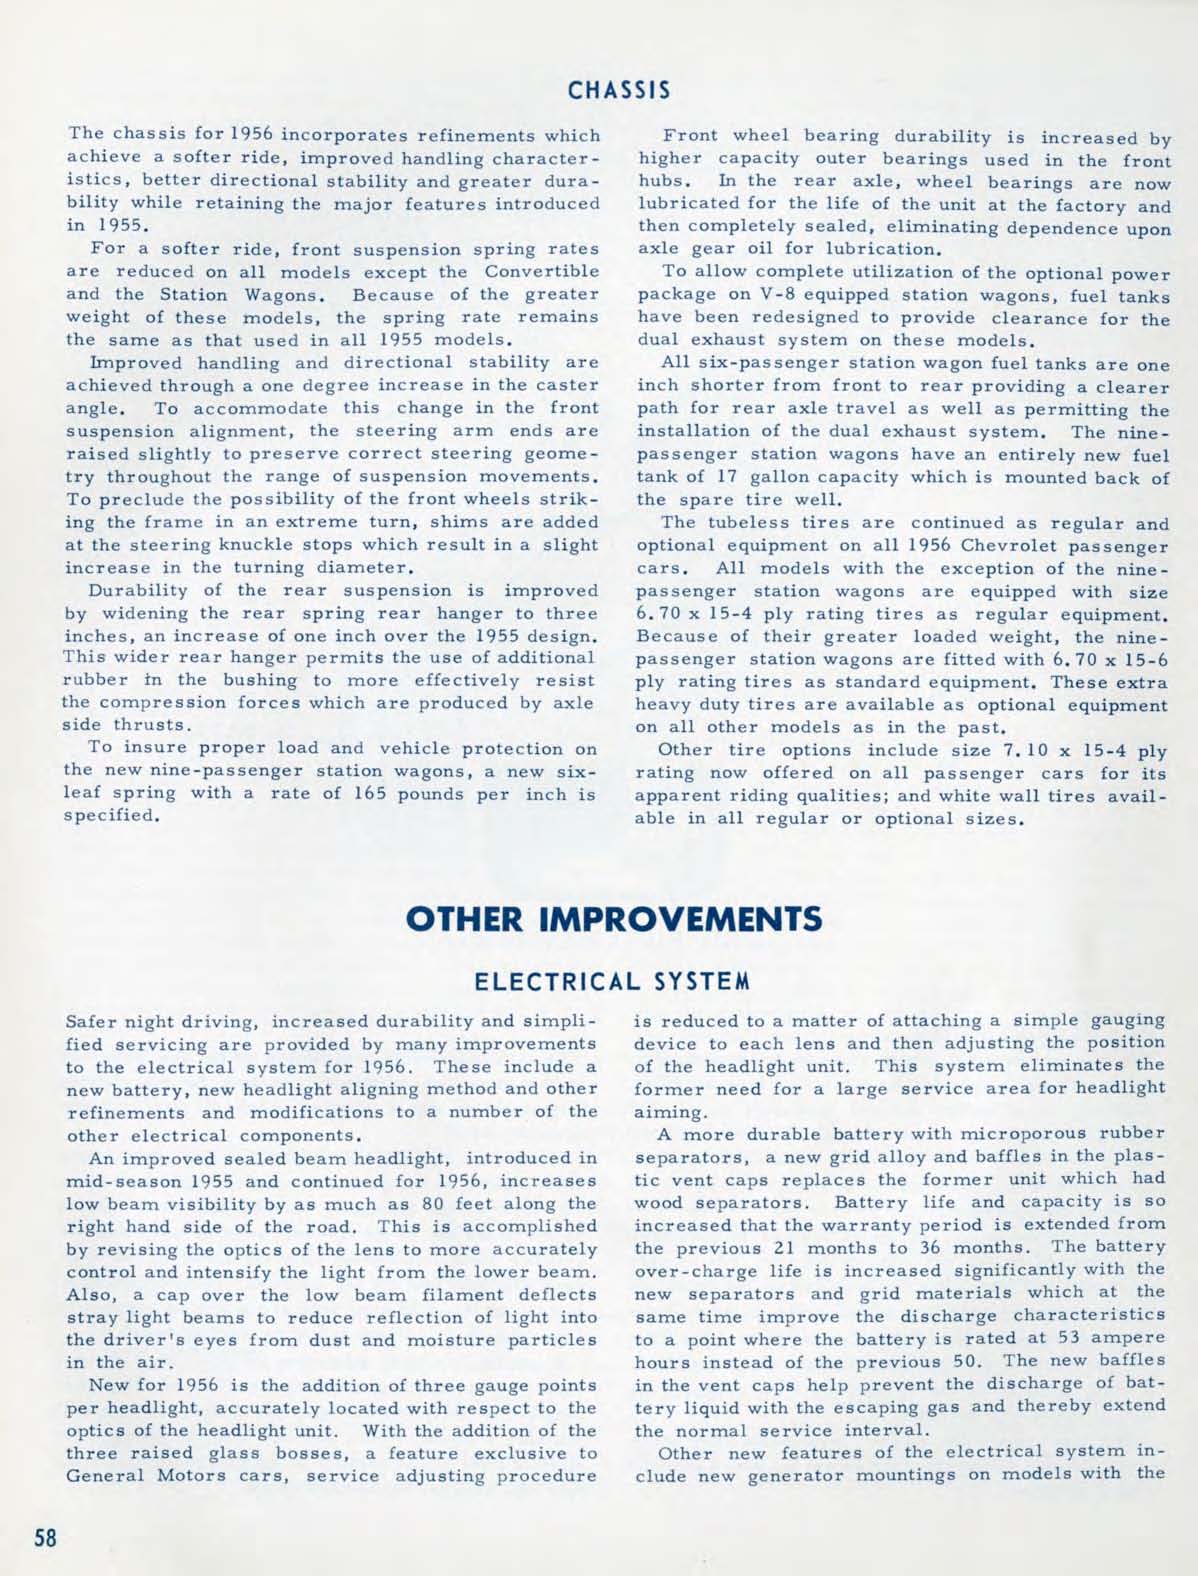 1956_Chevrolet_Engineering_Features-58